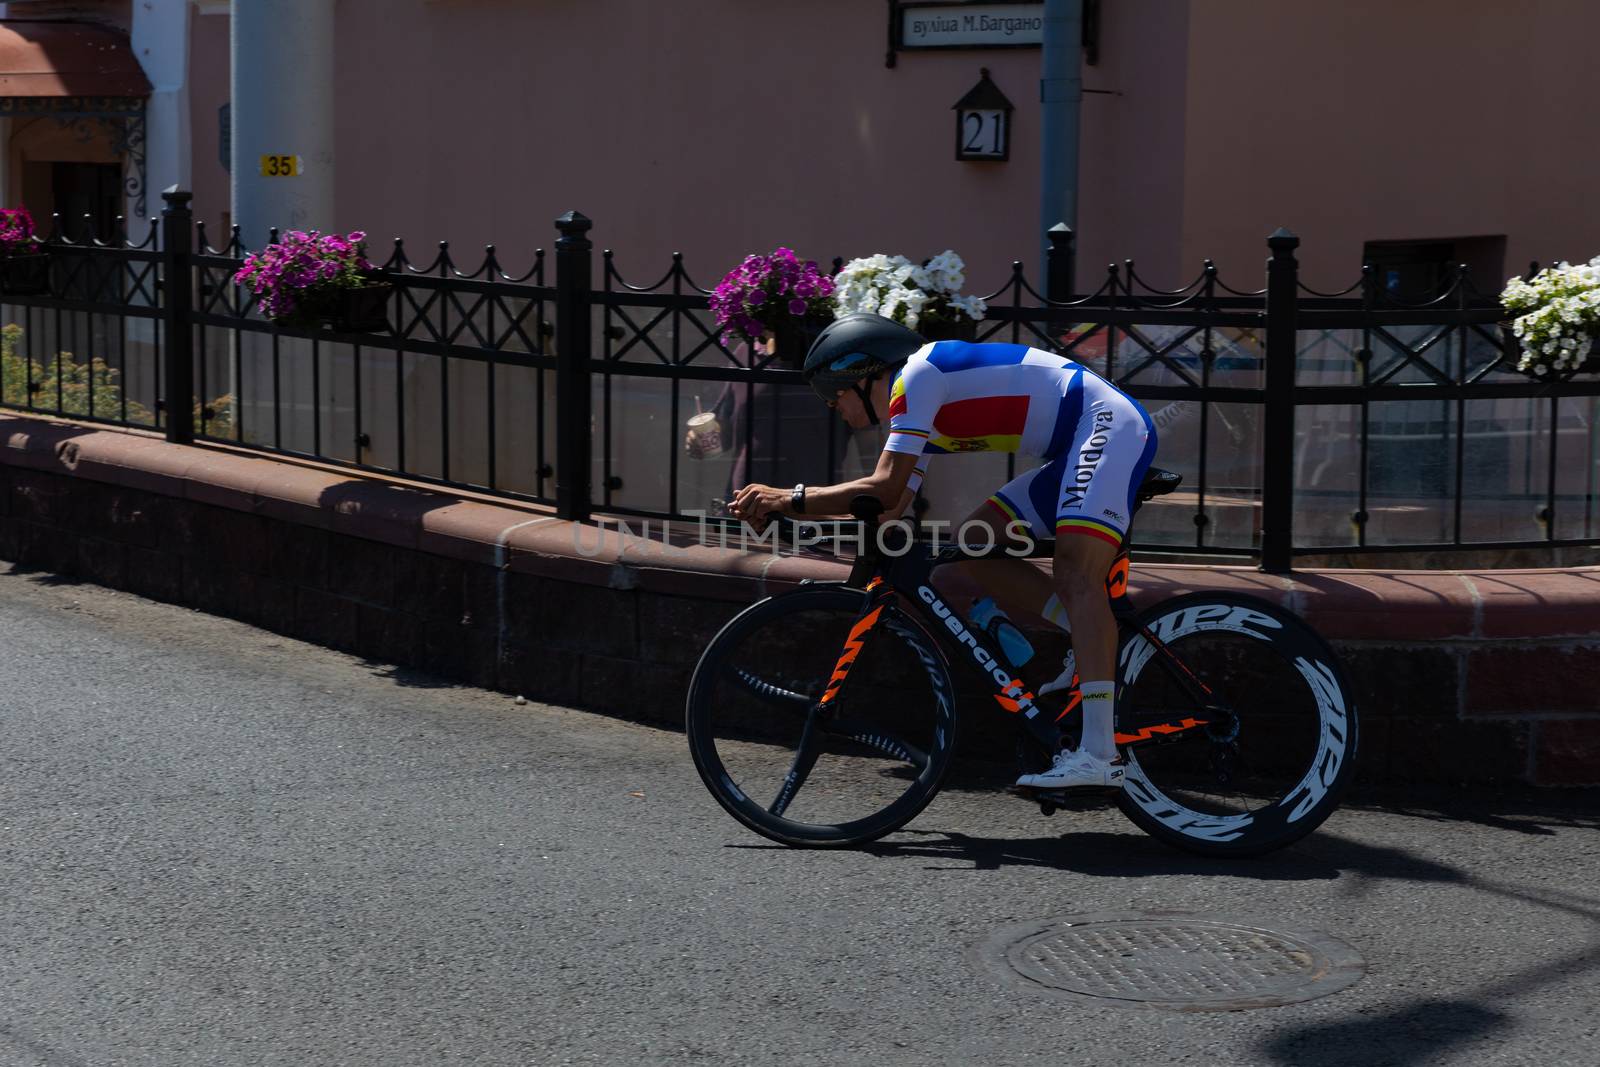 MINSK, BELARUS - JUNE 25, 2019: Cyclist from Moldova Asadov participates in Men Split Start Individual Race at the 2nd European Games event June 25, 2019 in Minsk, Belarus